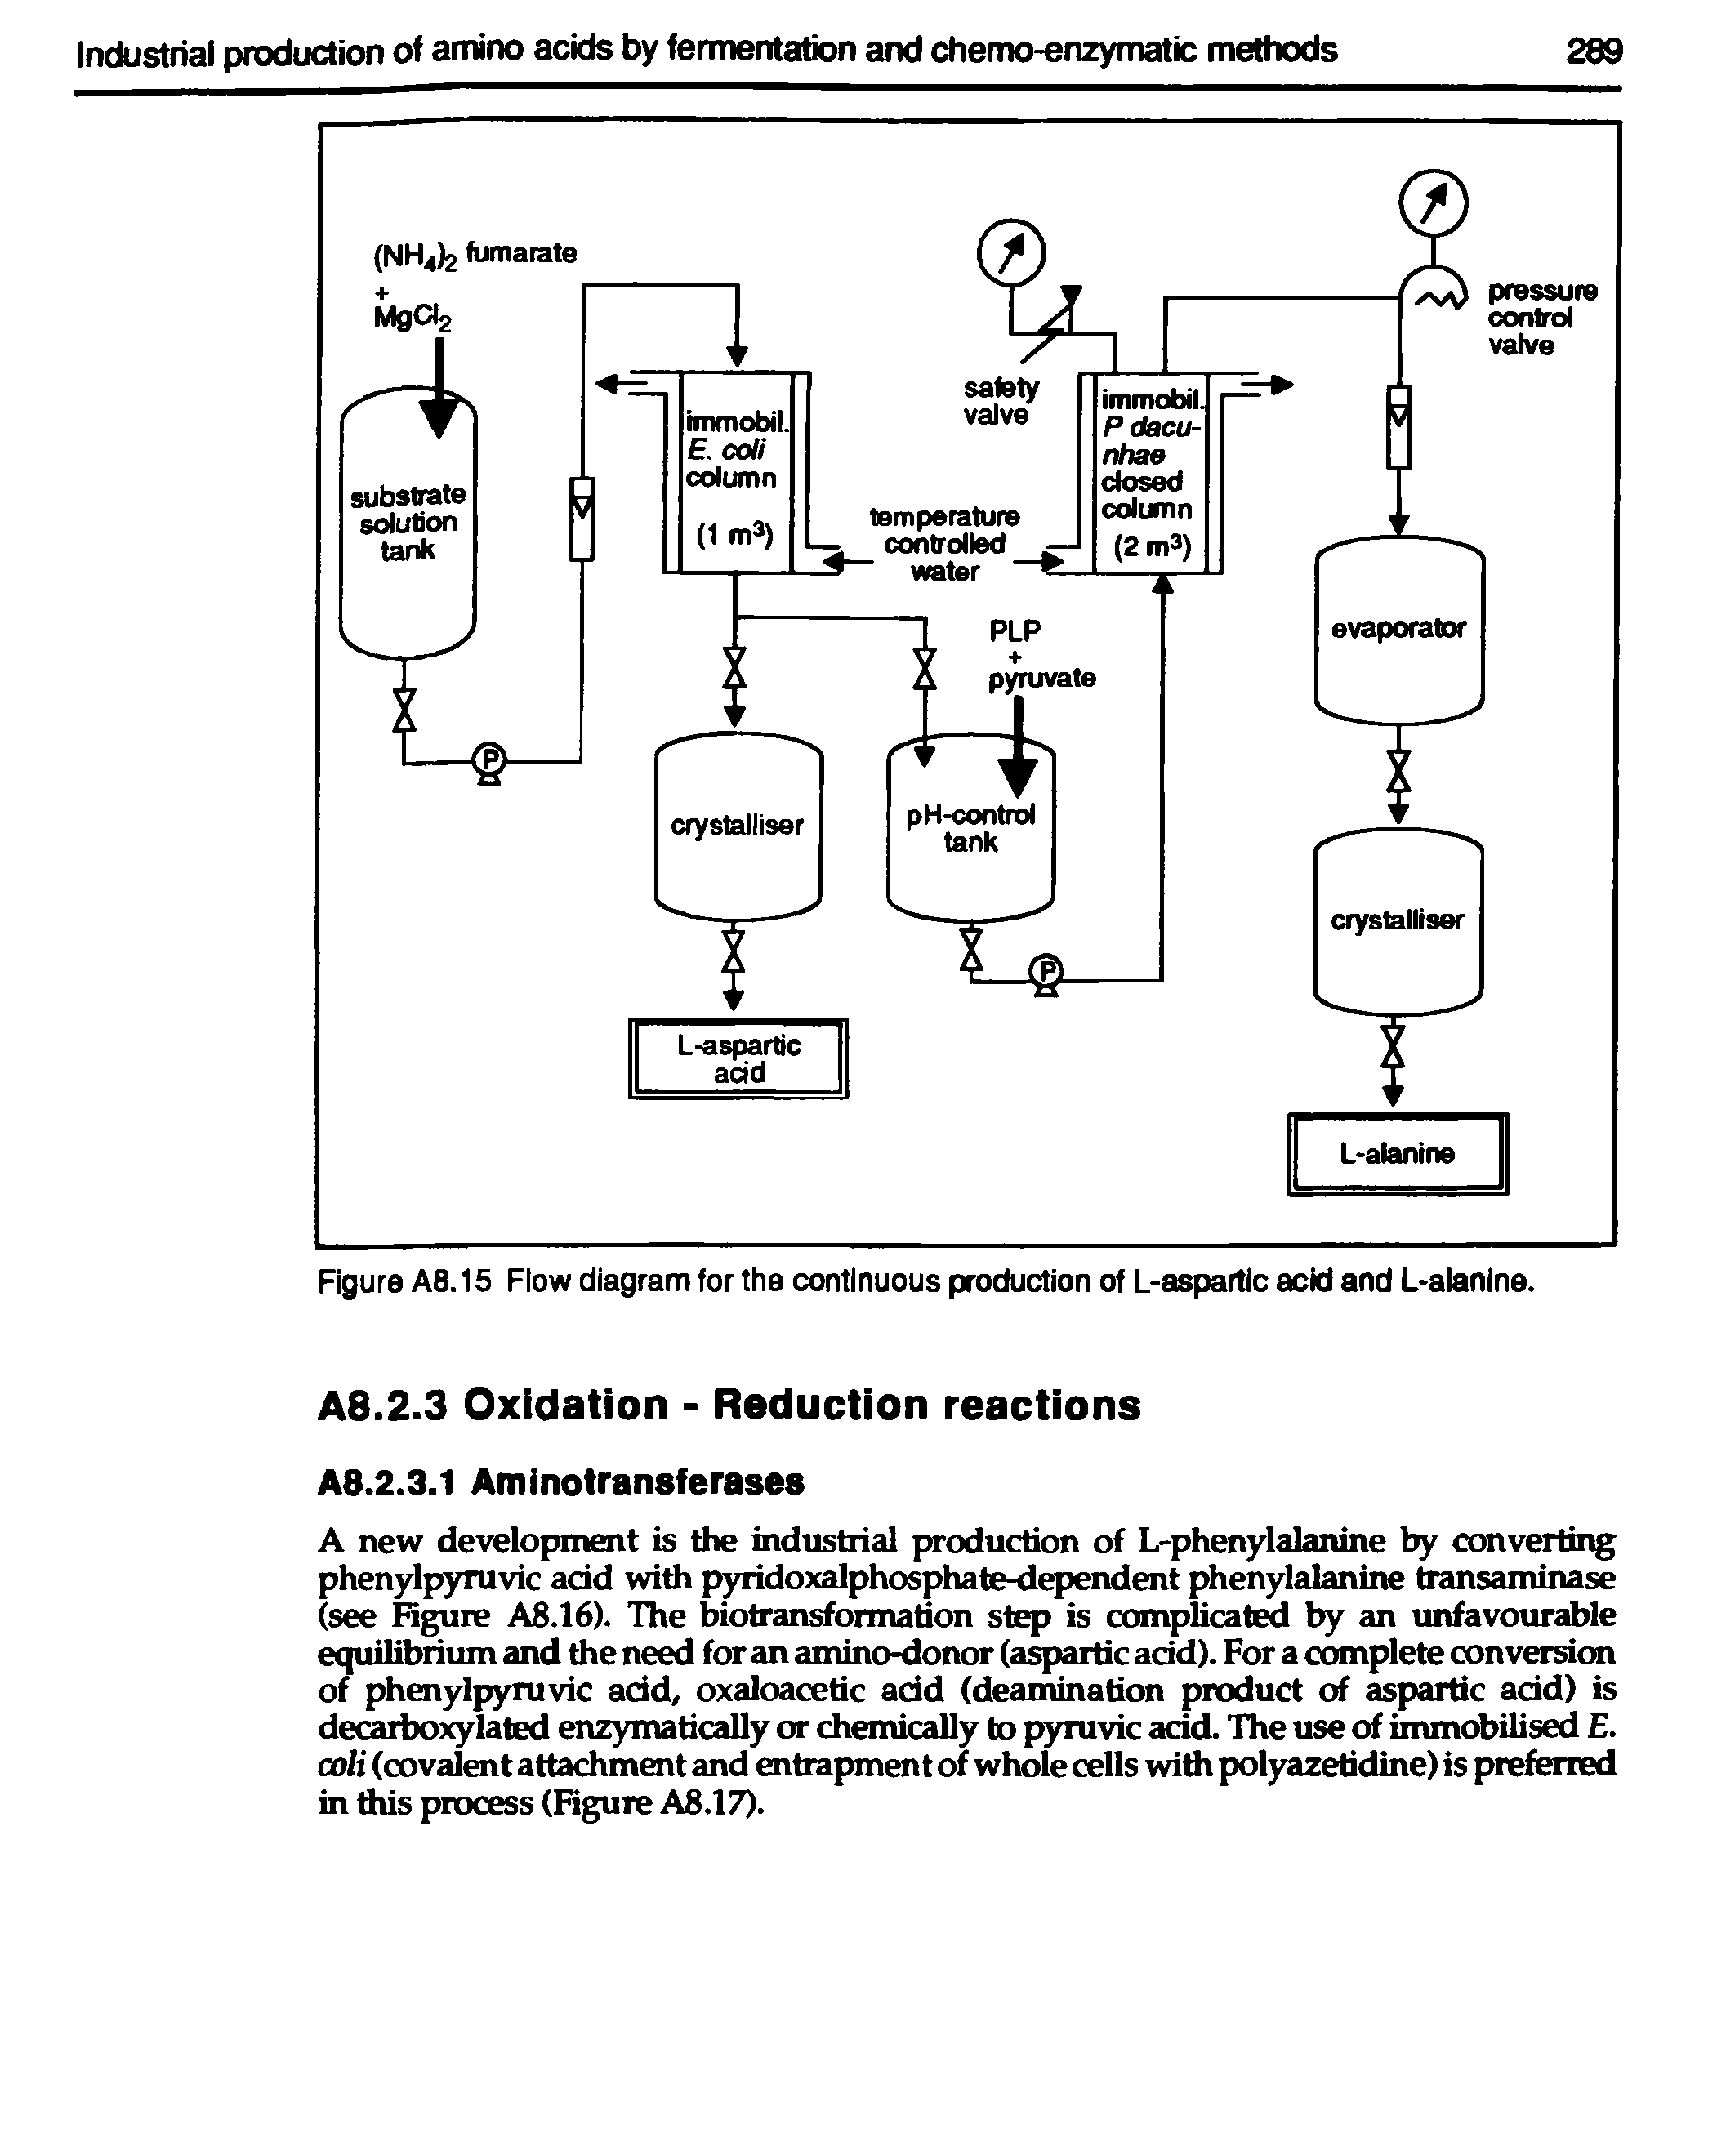 Figure A8.15 Flow diagram for the continuous production of L-aspartic acid and L-alanine.